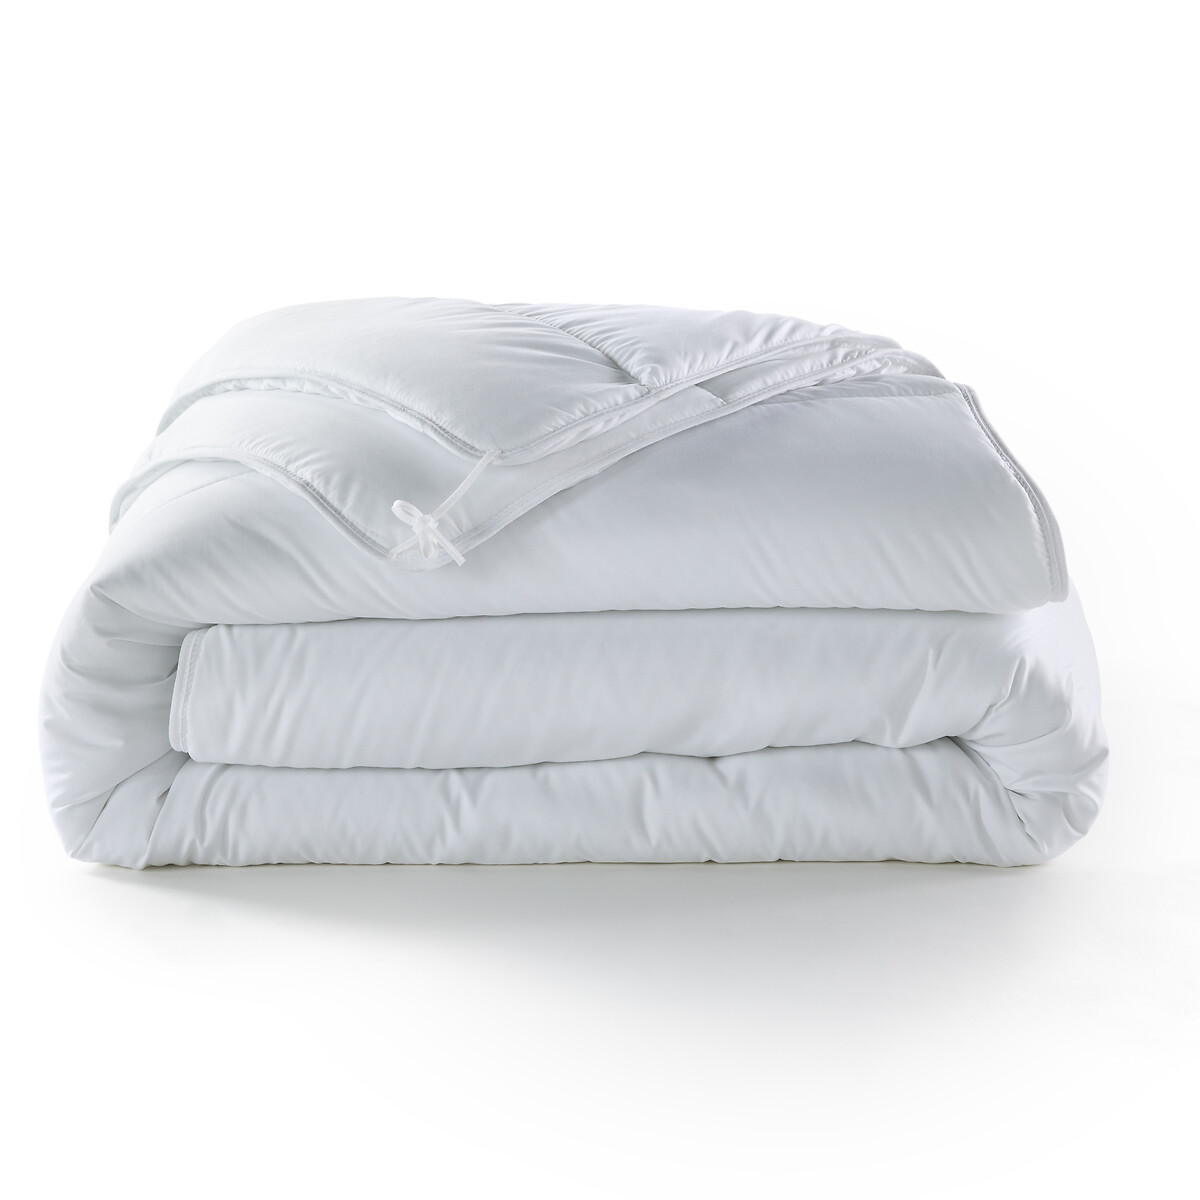 Одеяло La Redoute Синтетическое  сезона с обработкой BI-OME 240 x 220 см белый, размер 240 x 220 см - фото 2